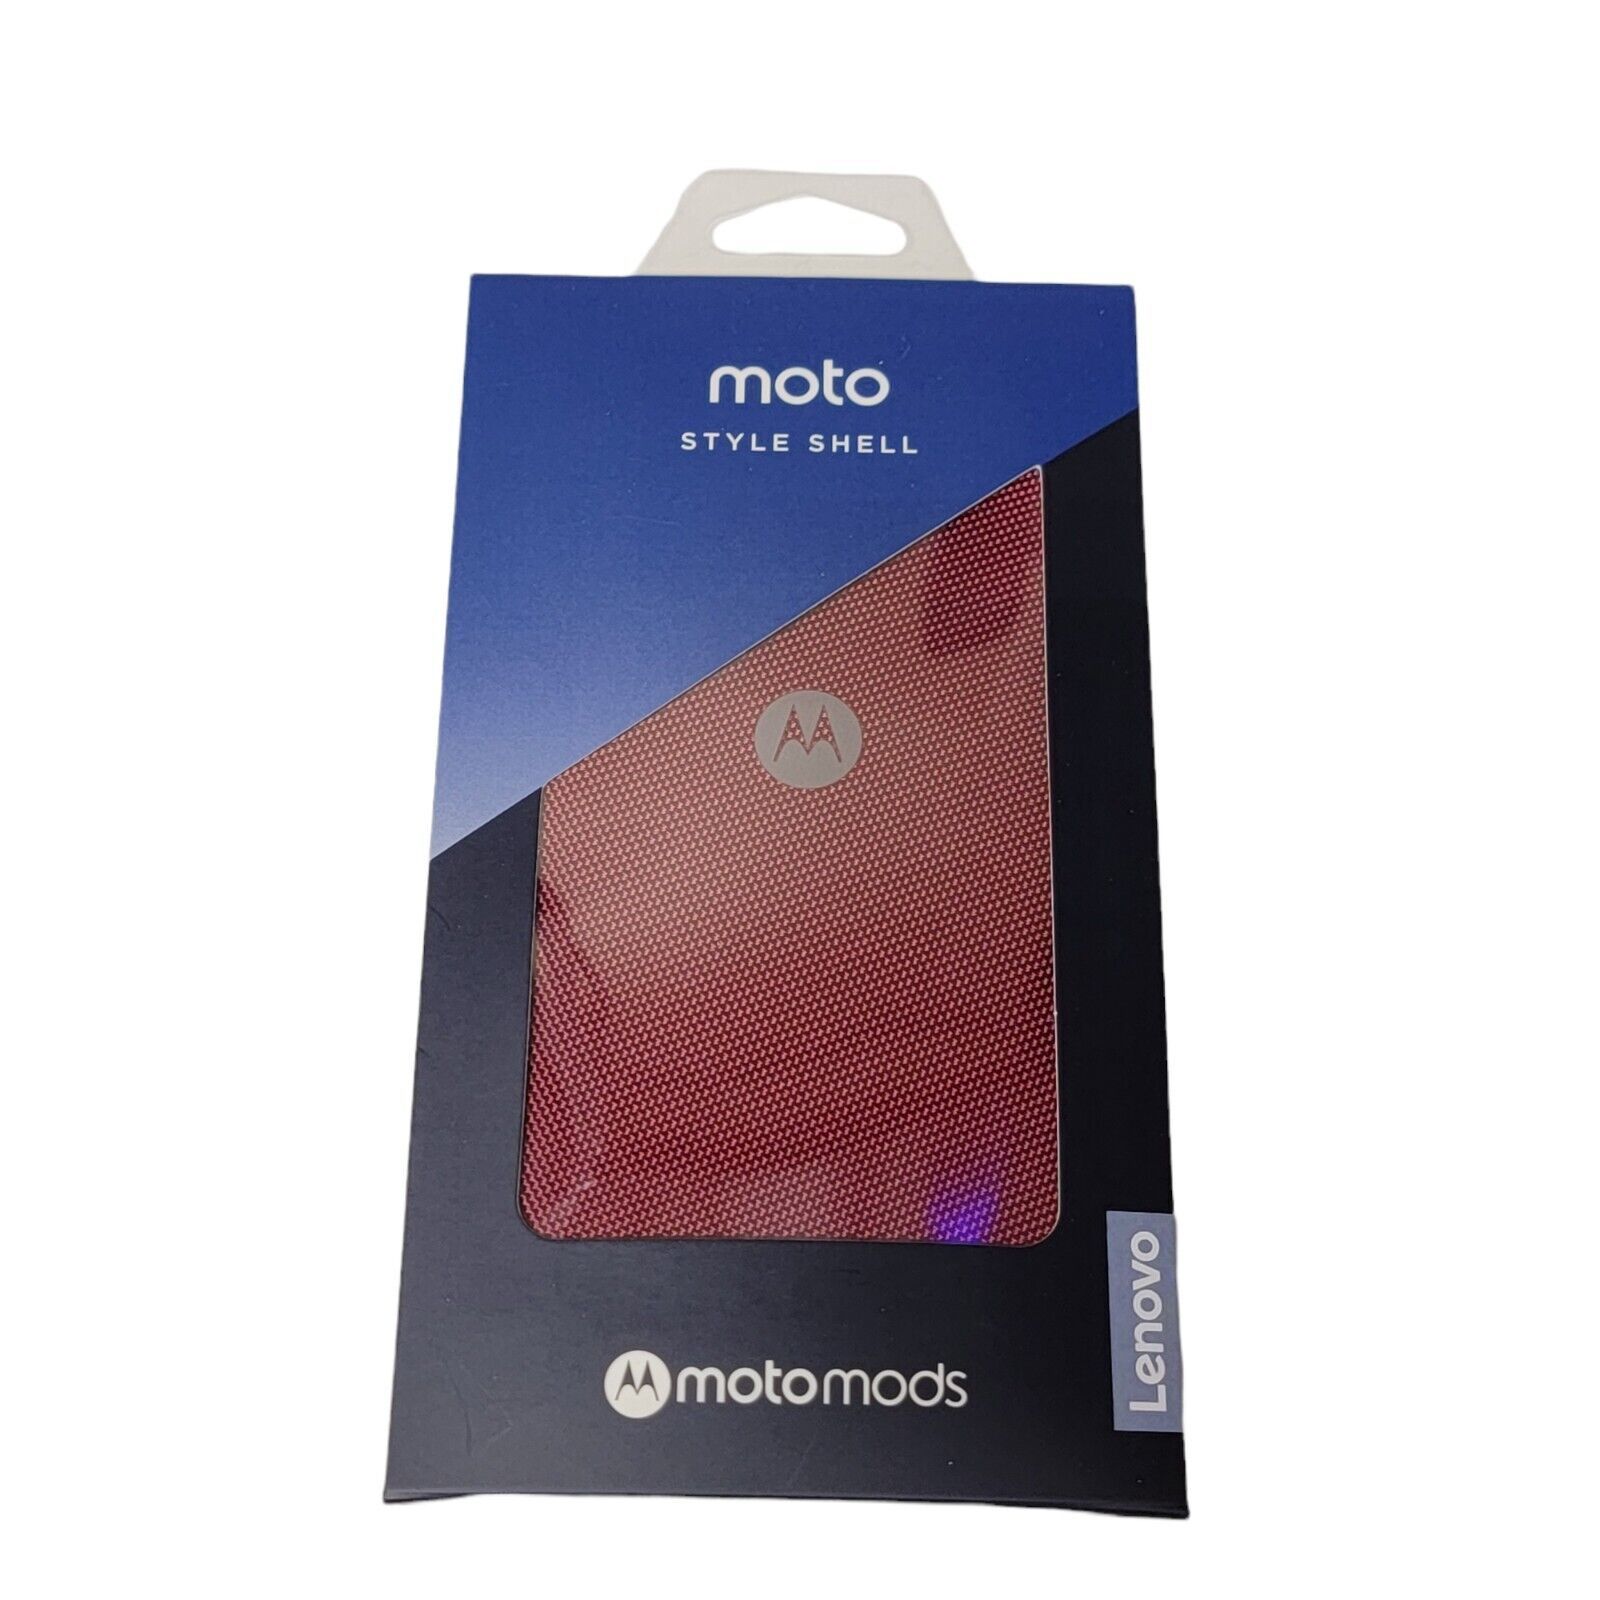 Primary image for Motorola Genuine Moto Mods Style Shell for Moto Z3 Phones, Red Ballistic Crimson